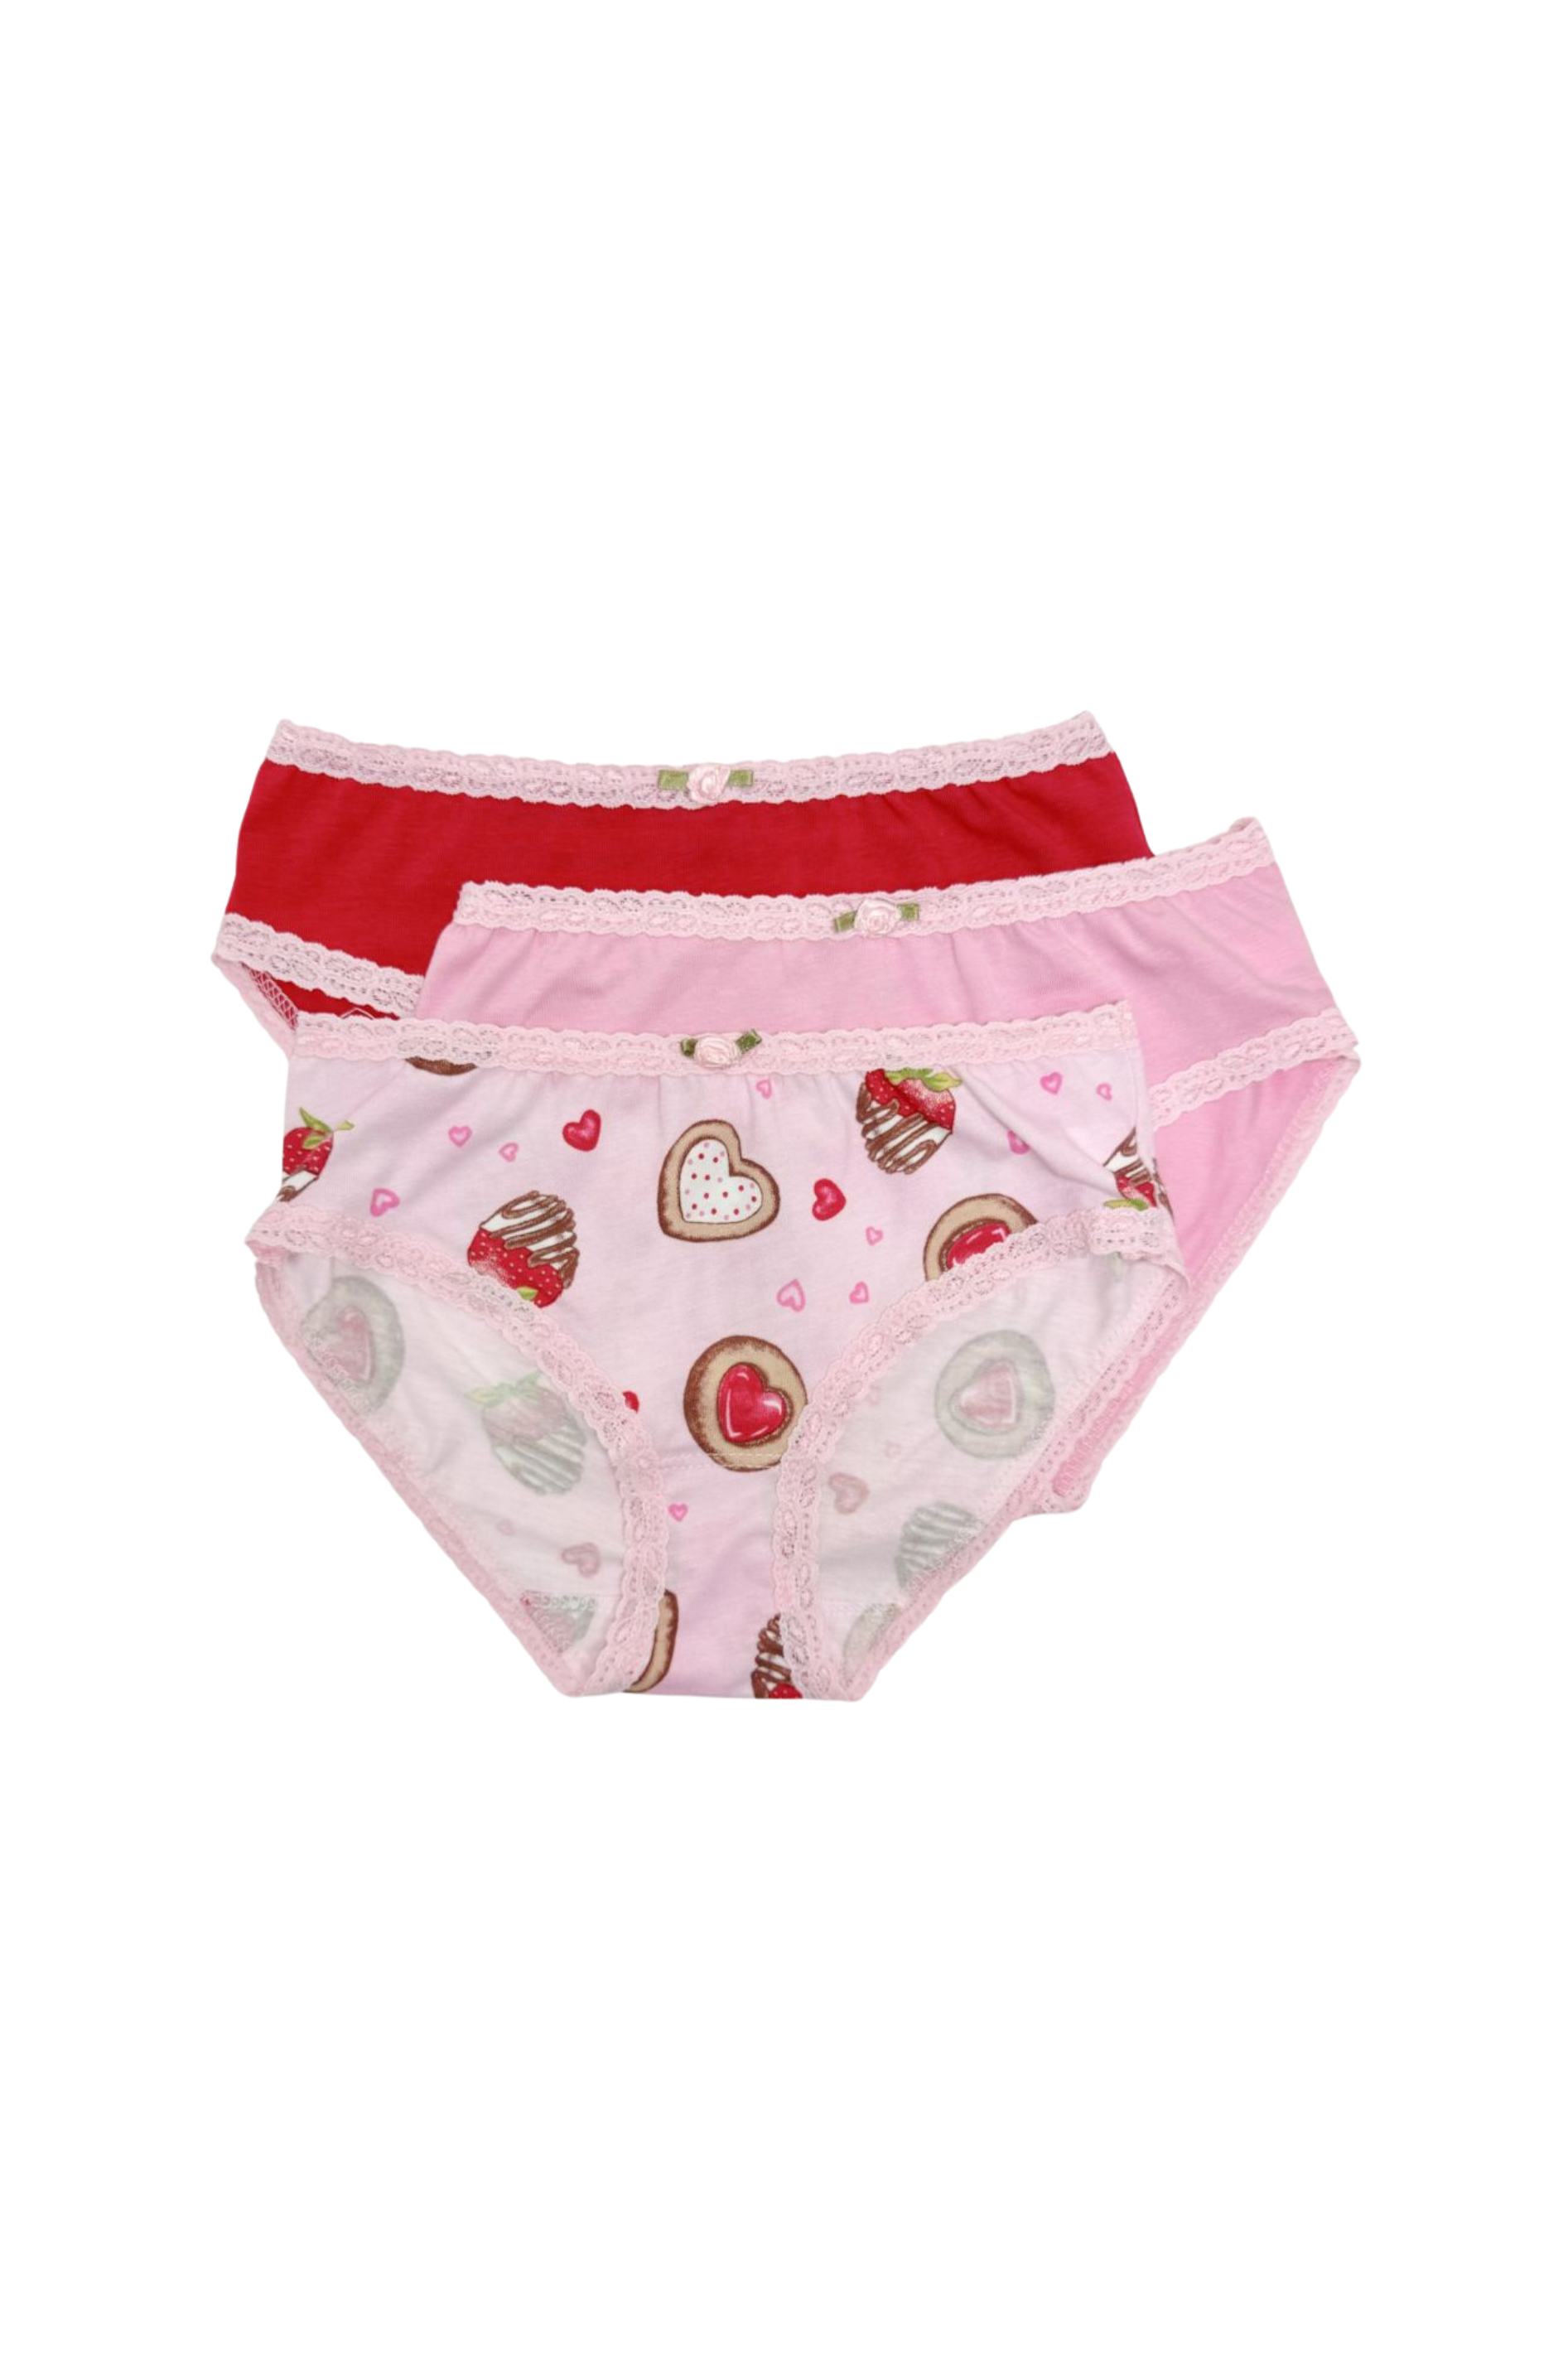 Esme - Sweet Delight 3 Panty Pack (3 Pack) 2-6x Girls Underwear Valentine's  Kids Girls Toddlers – Dottie Doolittle